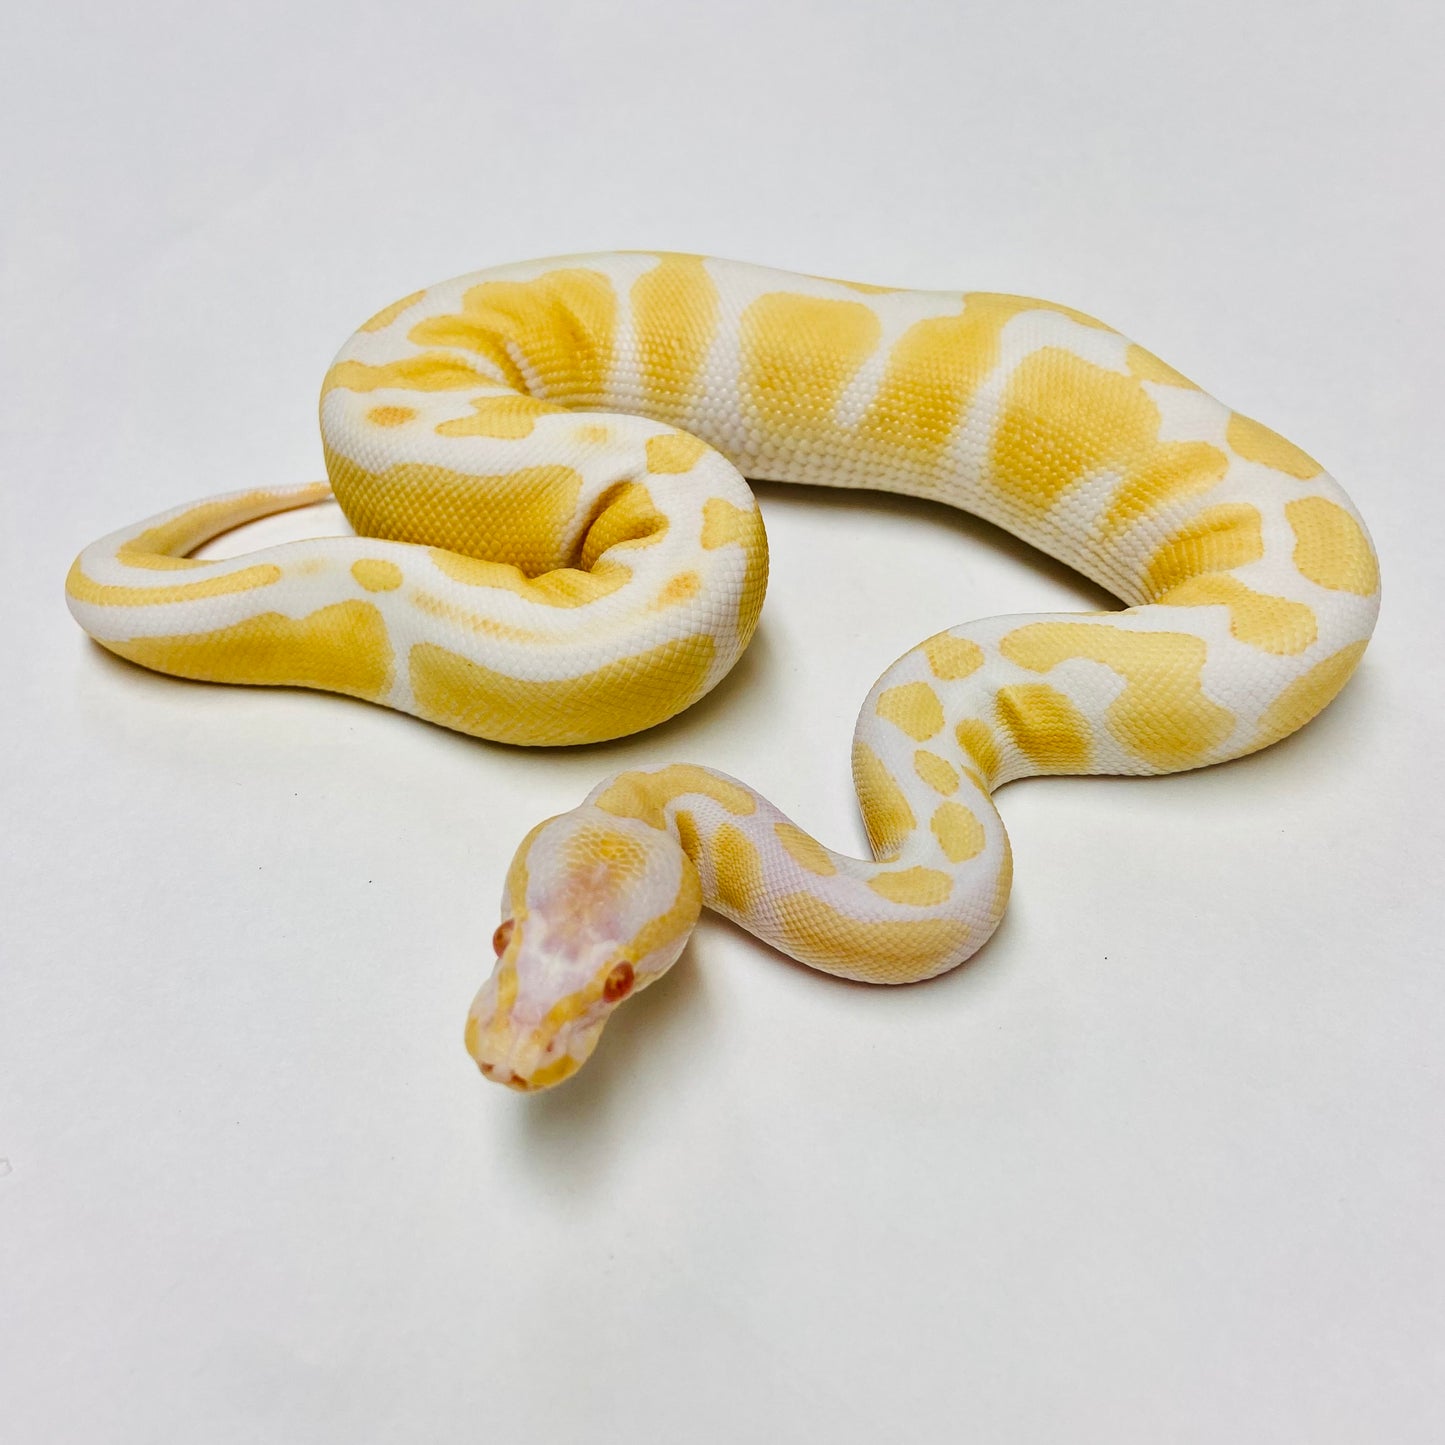 Albino Het Pied Ball Python- Male #2023M03